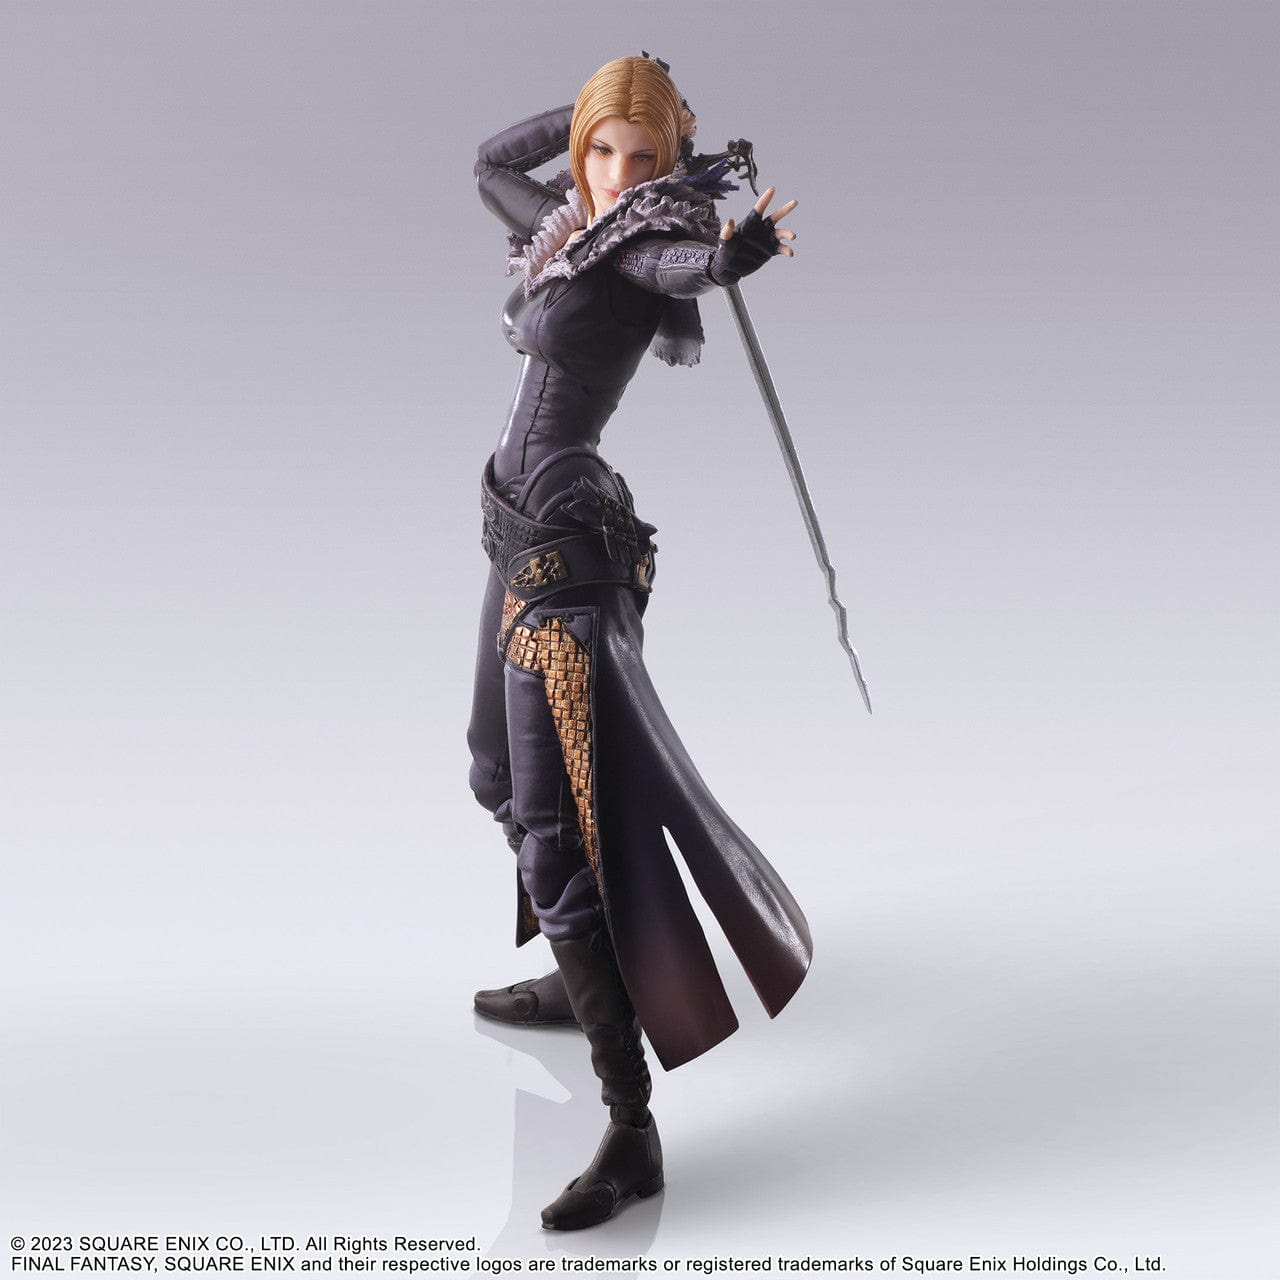 Square Enix FINAL FANTASY XVI BRING ARTS™ Action Figure - BENEDIKTA HARMAN